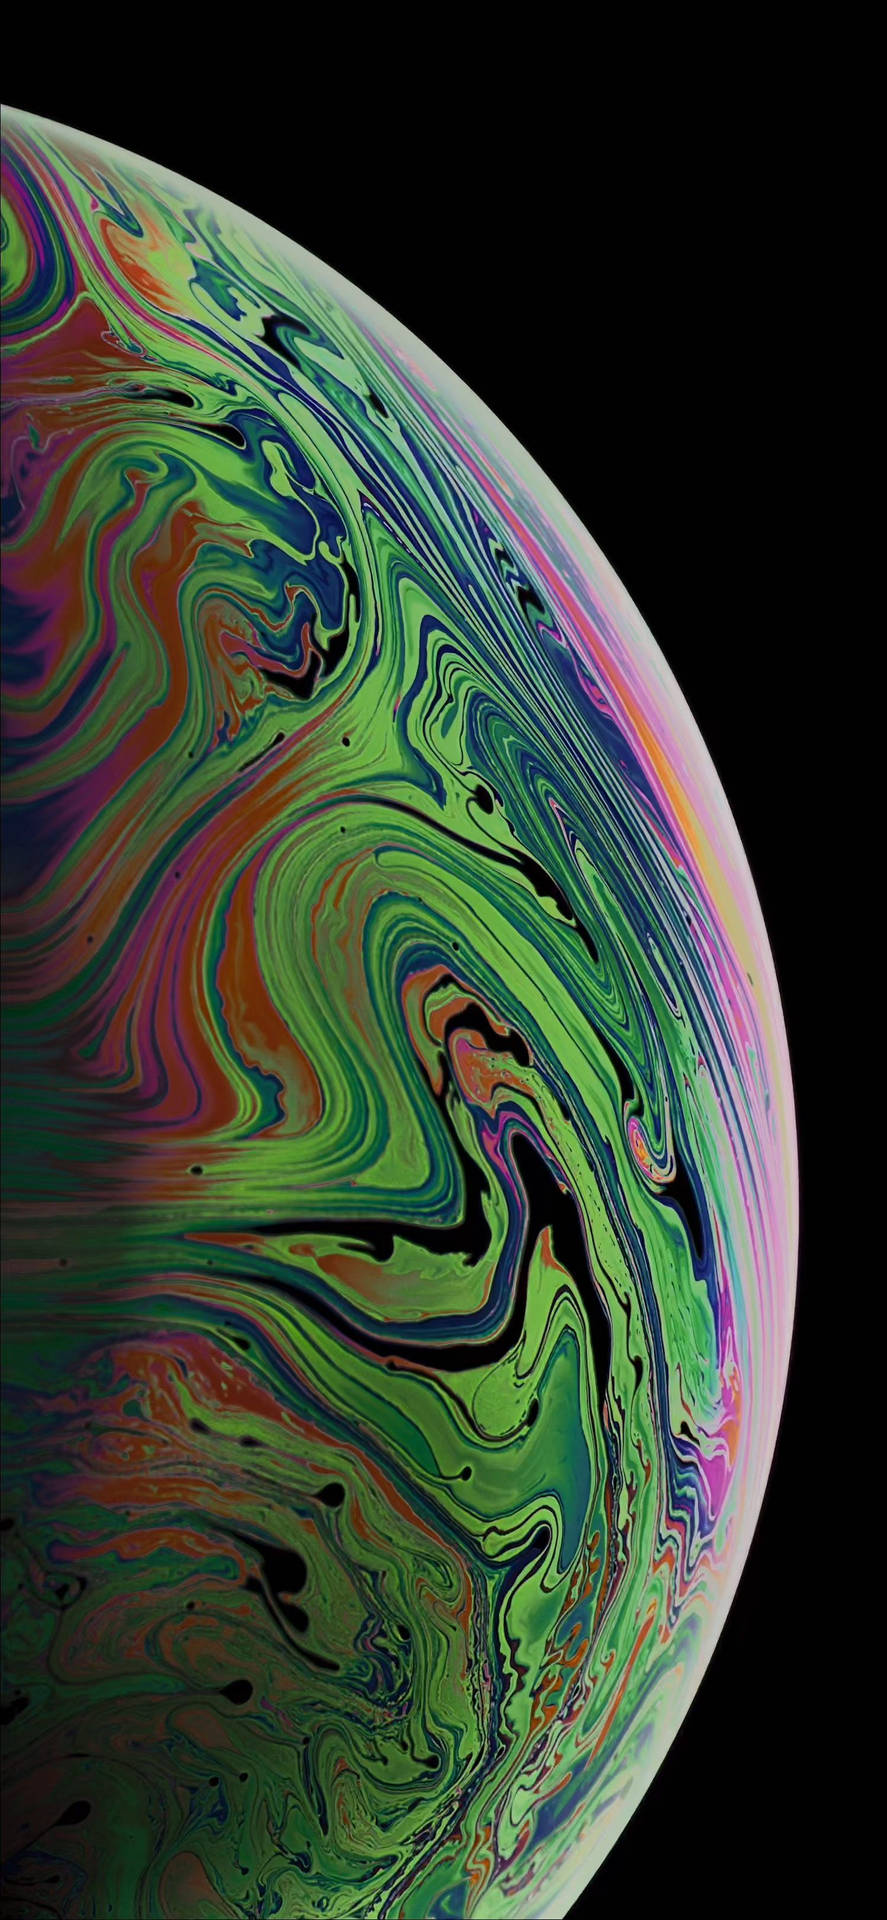 Grünergasförmiger Planet Iphone 8 Live Wallpaper